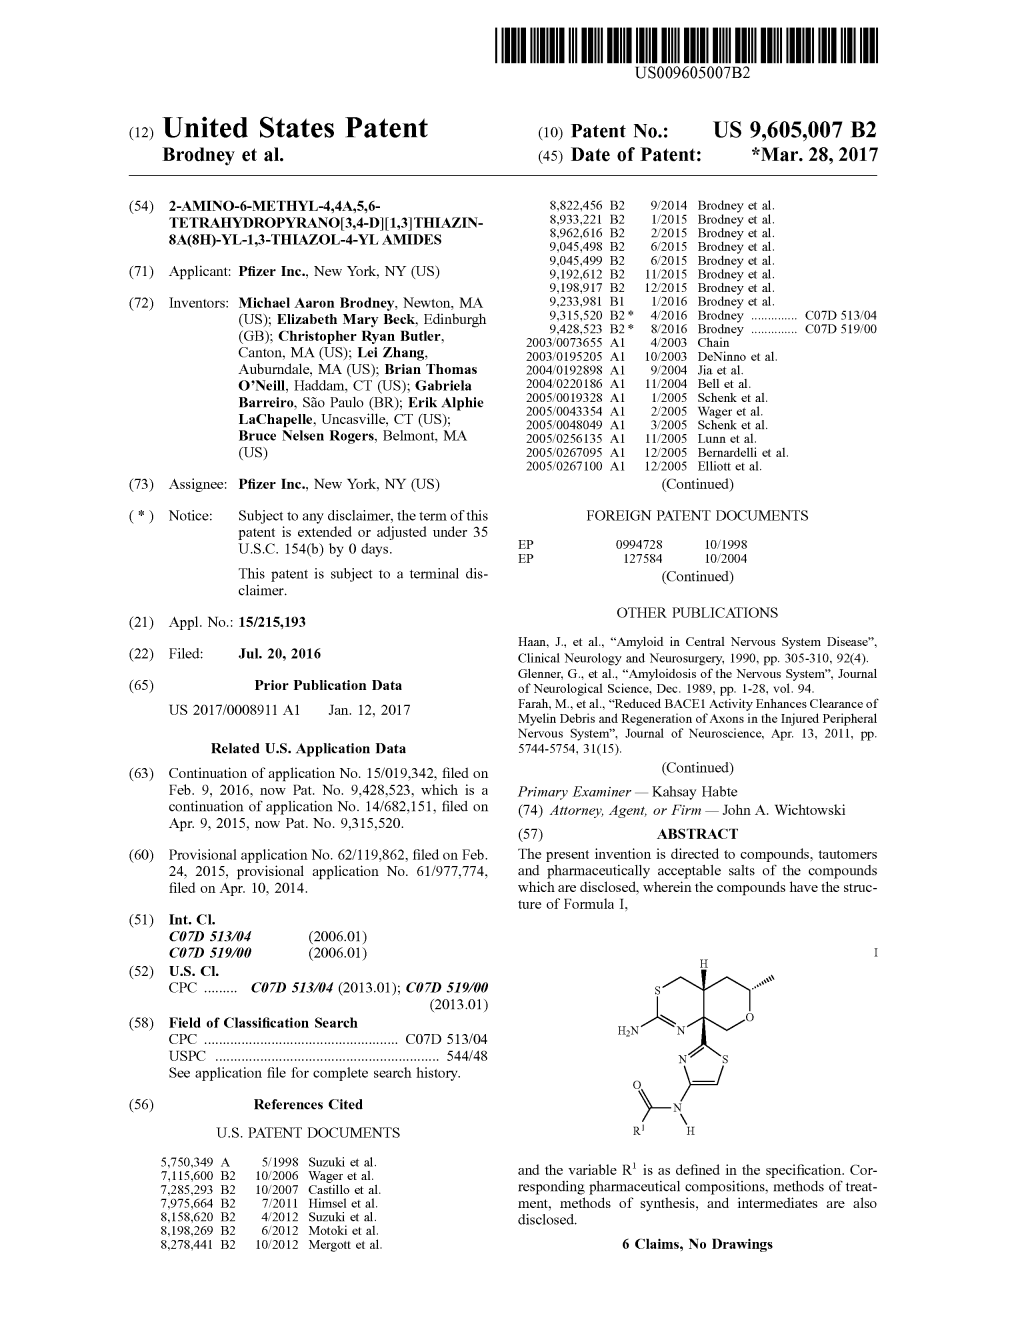 (12) United States Patent (10) Patent No.: US 9,605,007 B2 Brodney Et Al